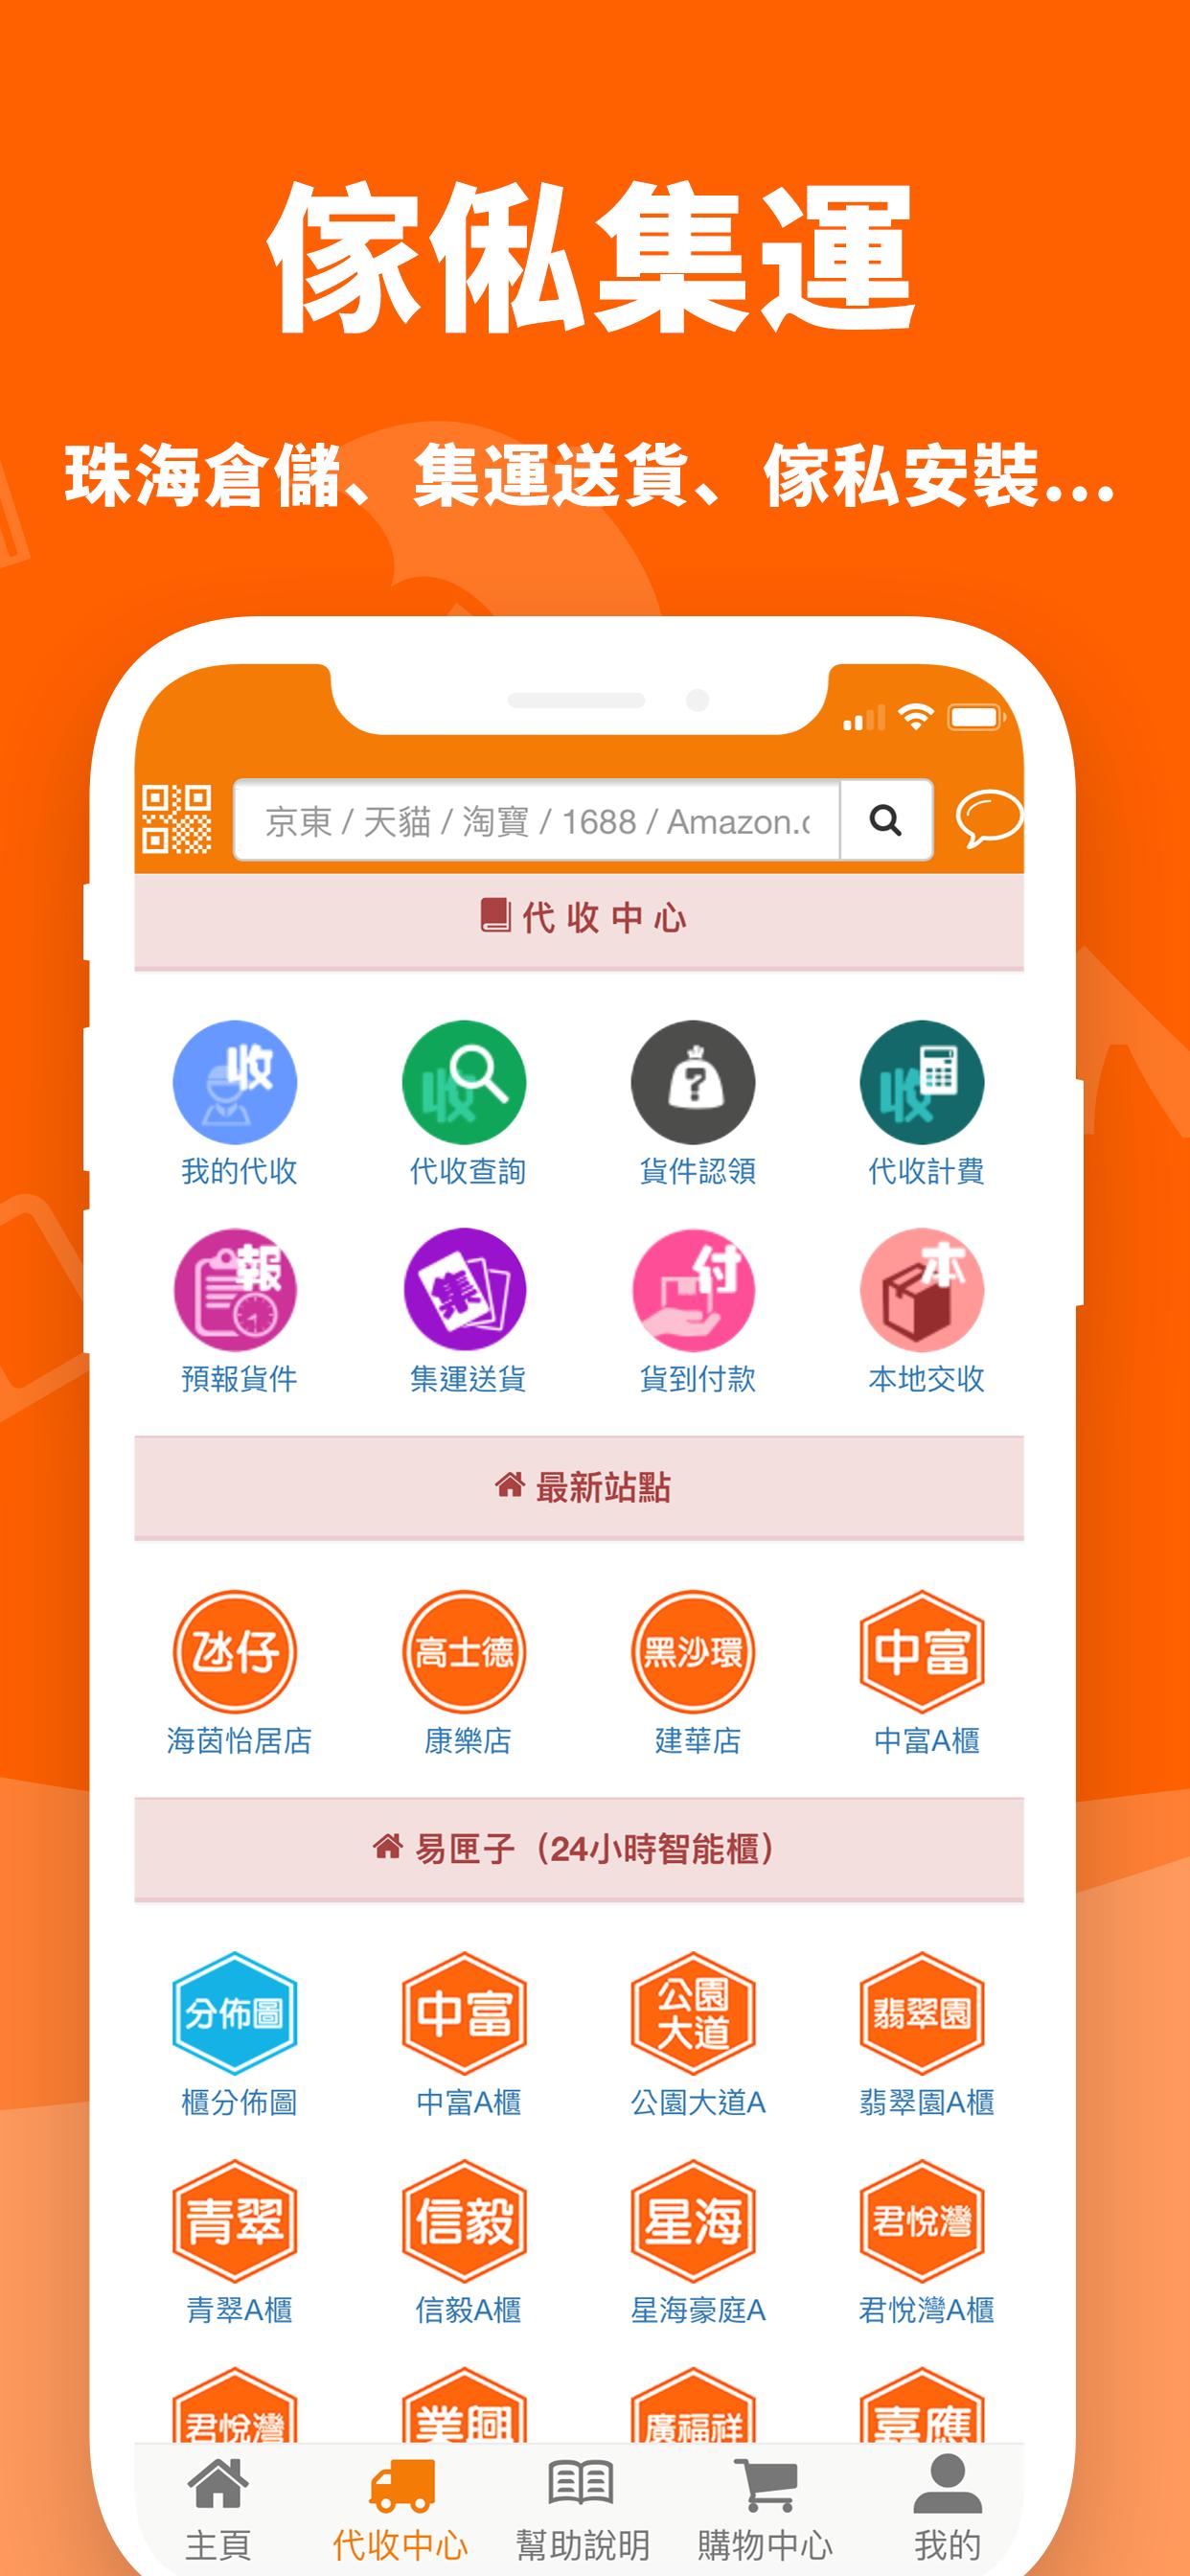 eBuy.mo 澳門易購網 2.1.4 Screenshot 5